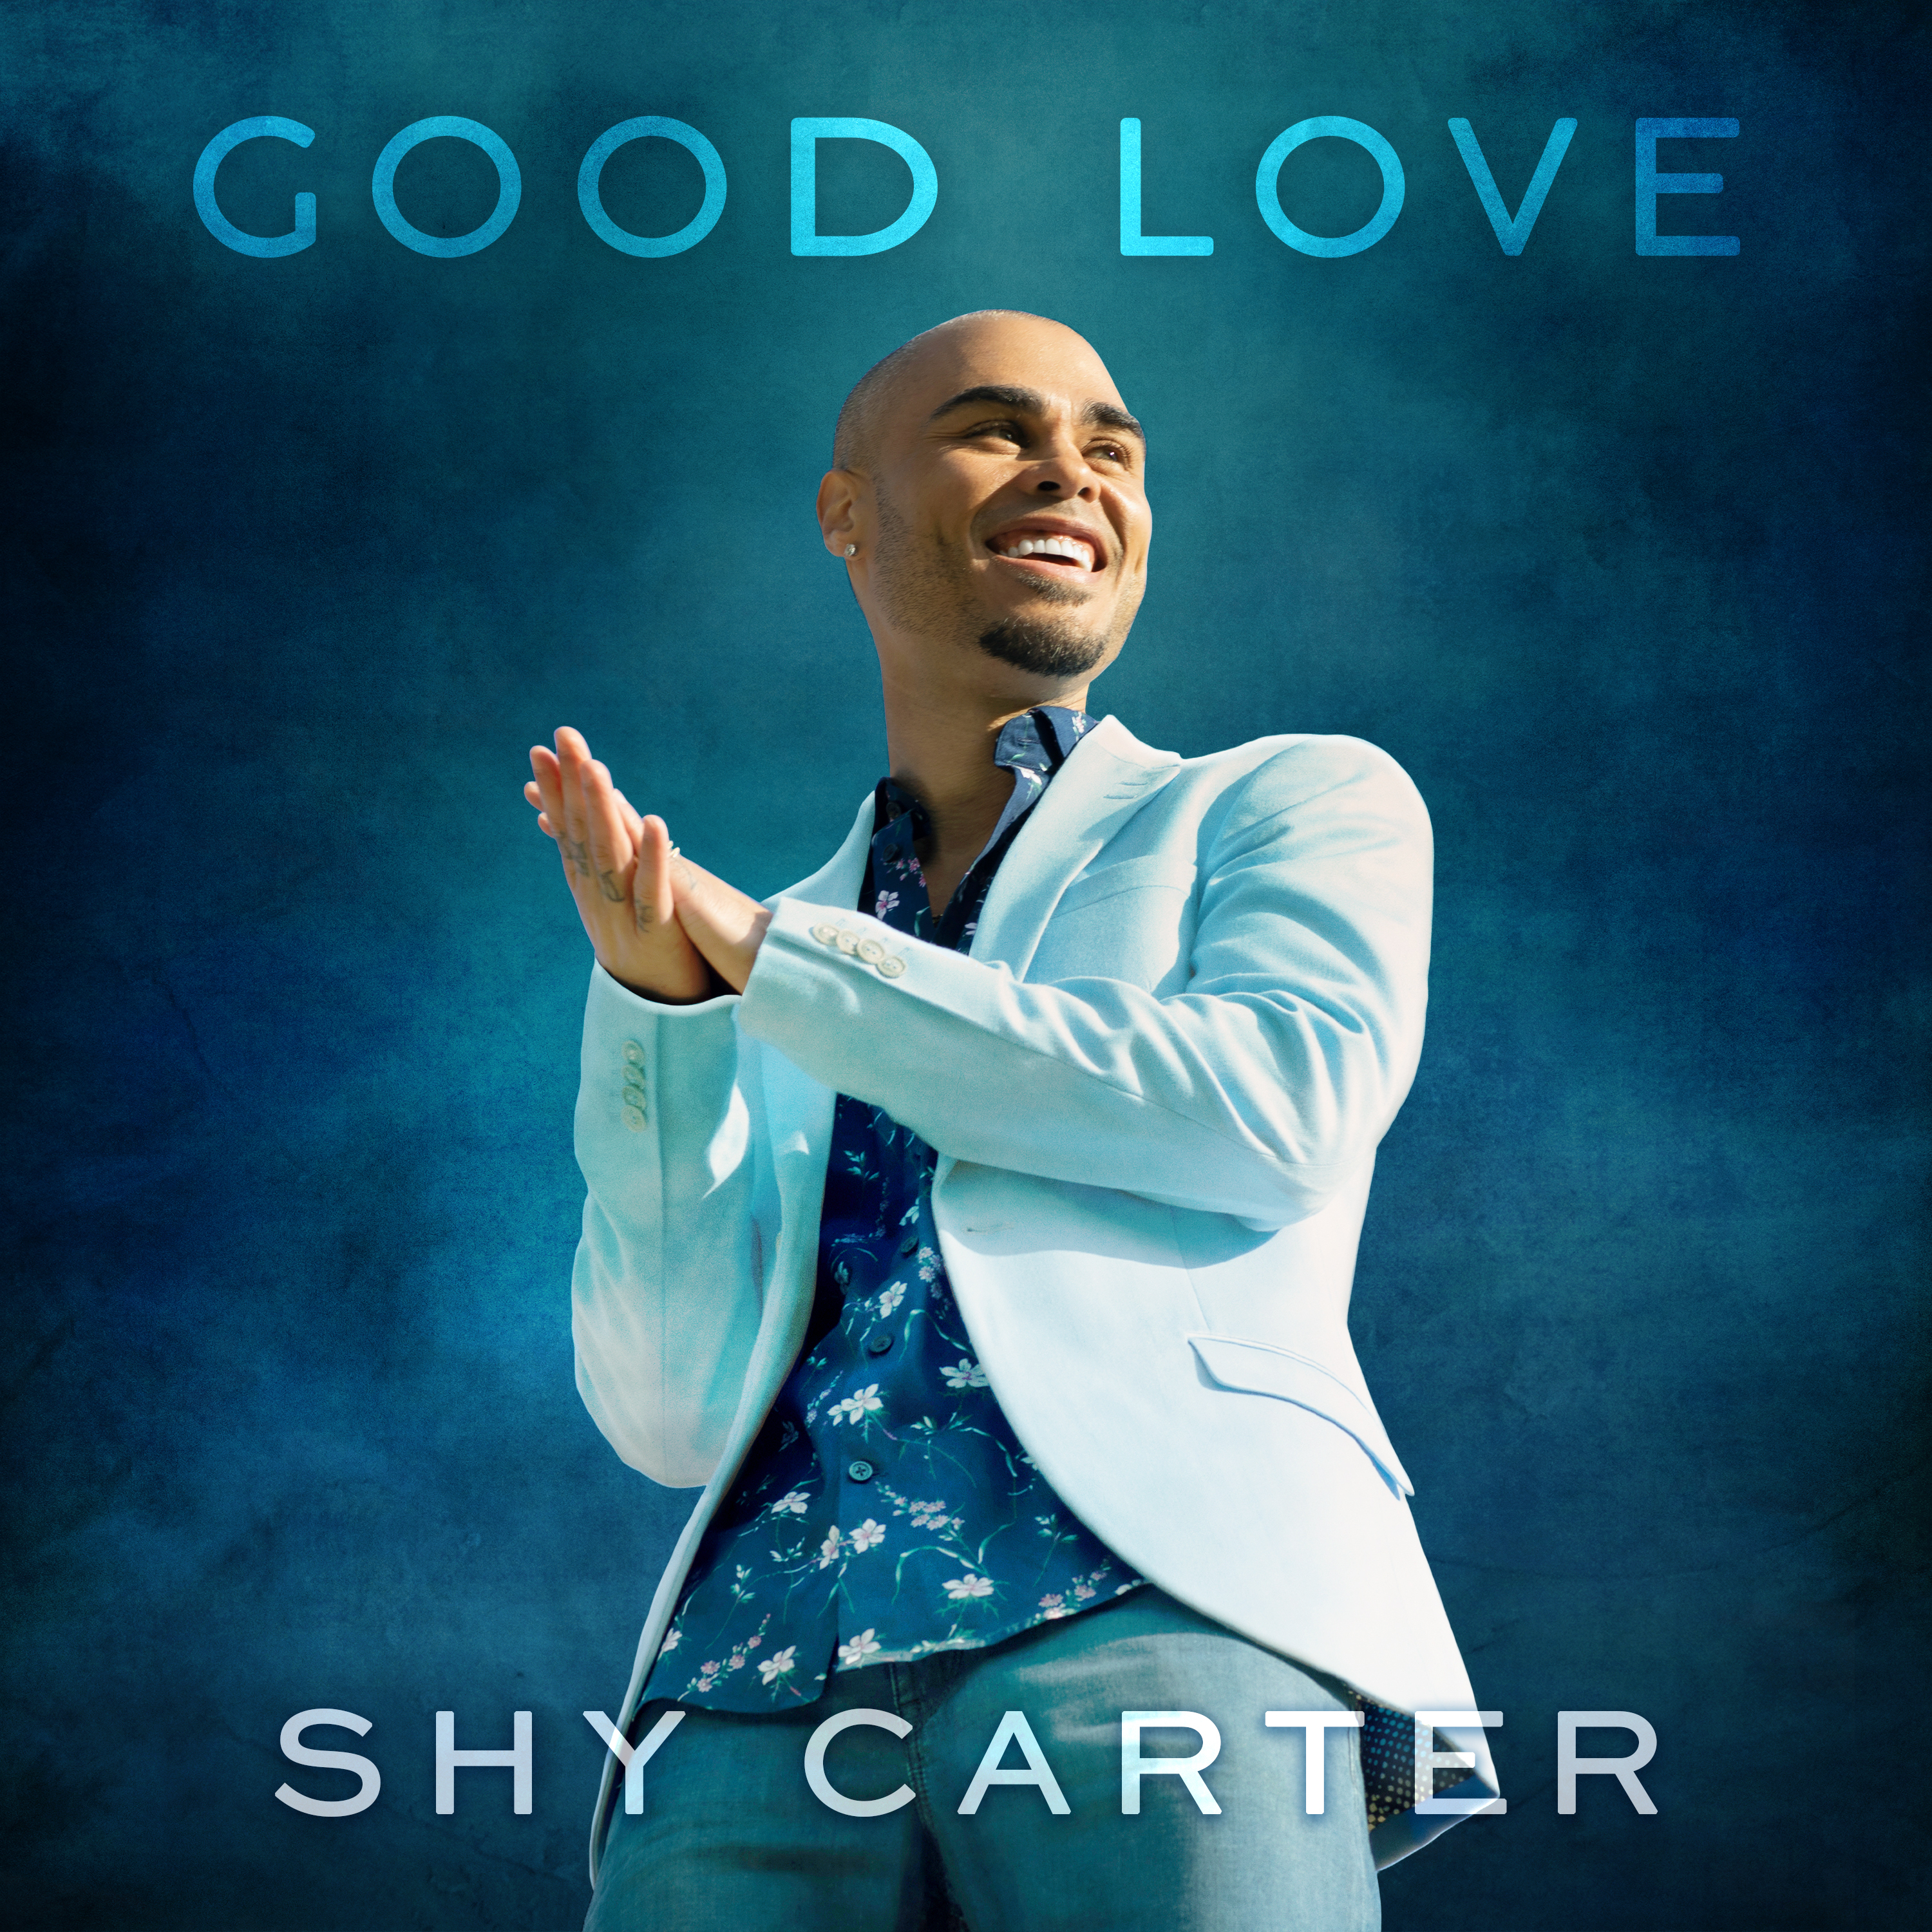 SHY CARTER OFFERS “GOOD LOVE” IN WARNER MUSIC NASHVILLE DEBUT